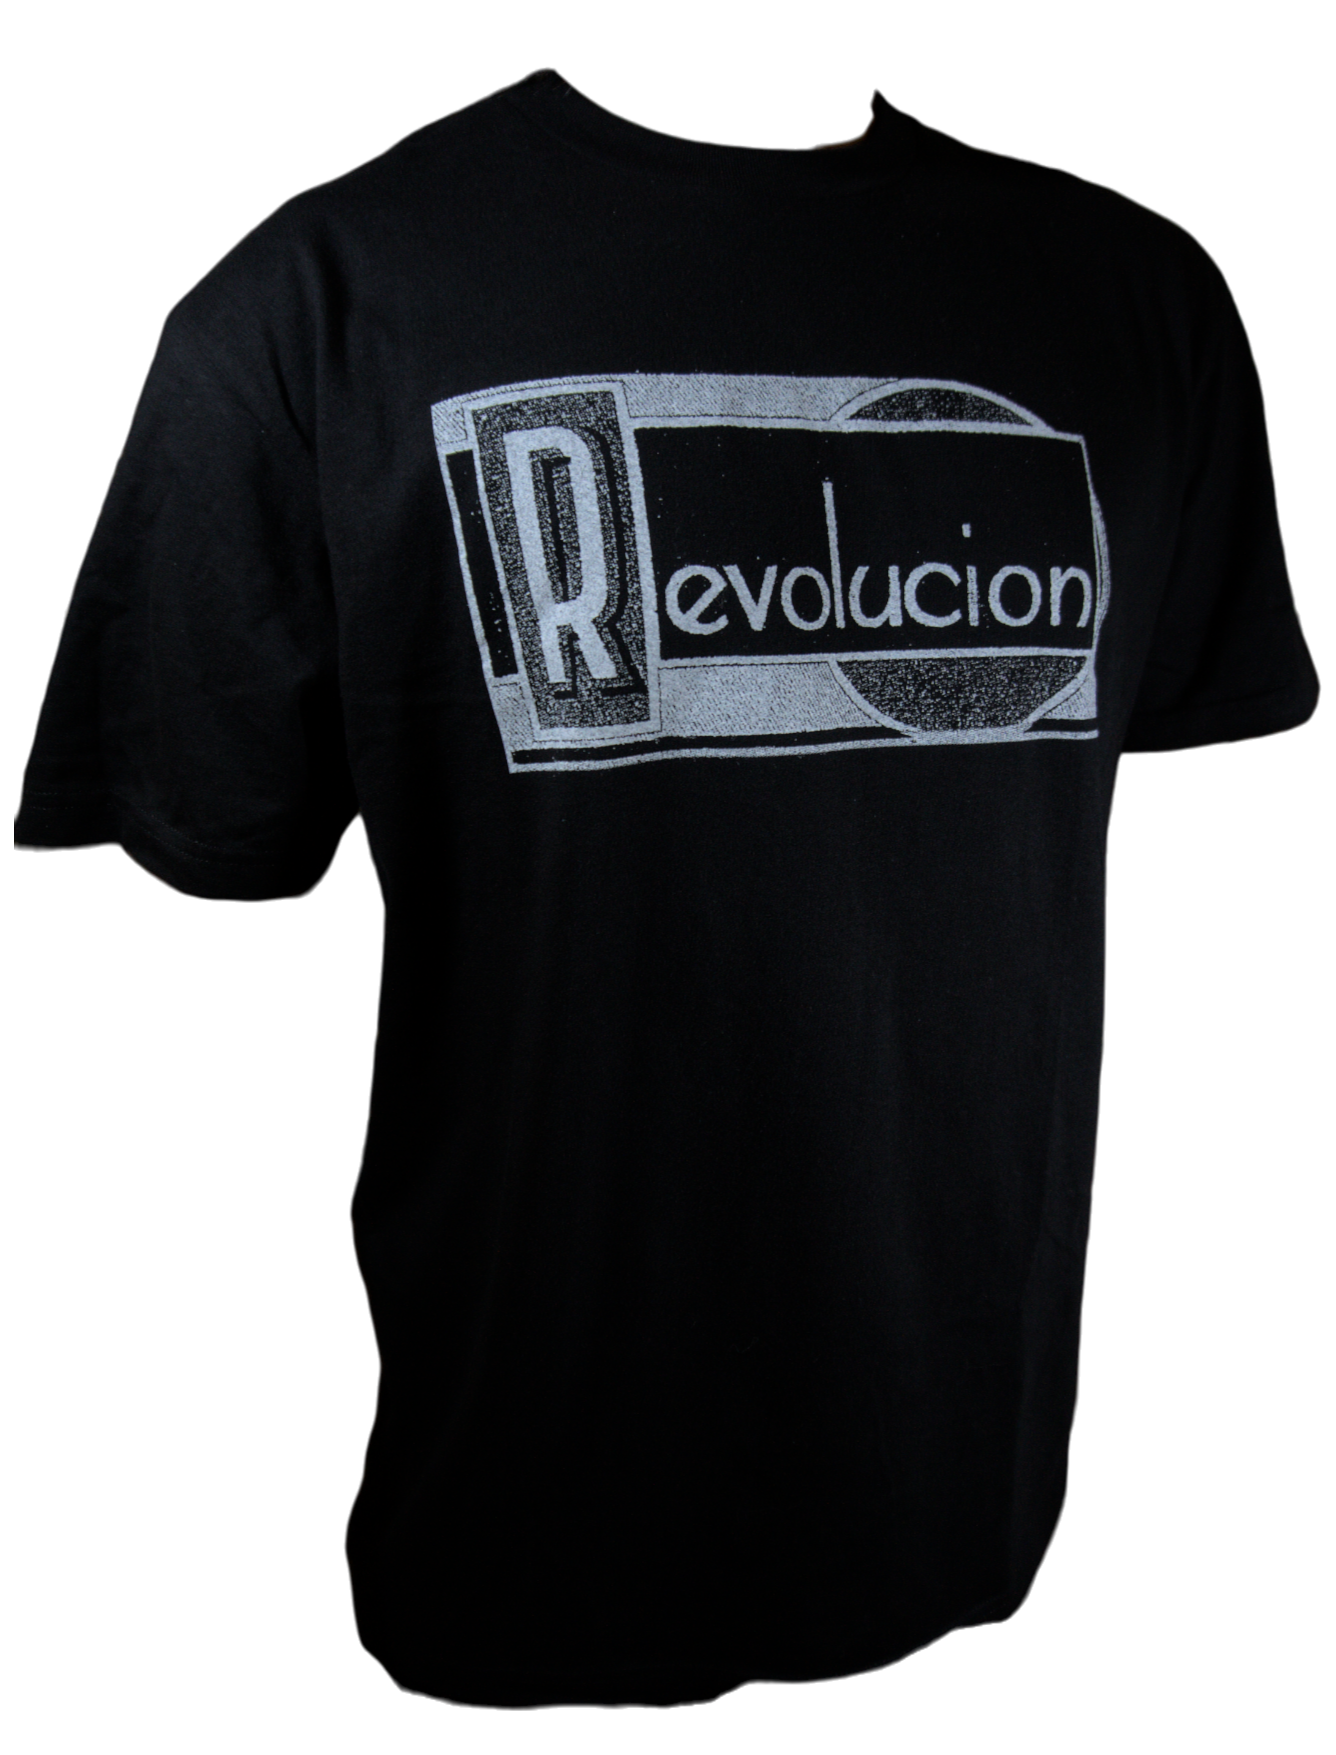 Revolucion - Cigar Band T-Shirt